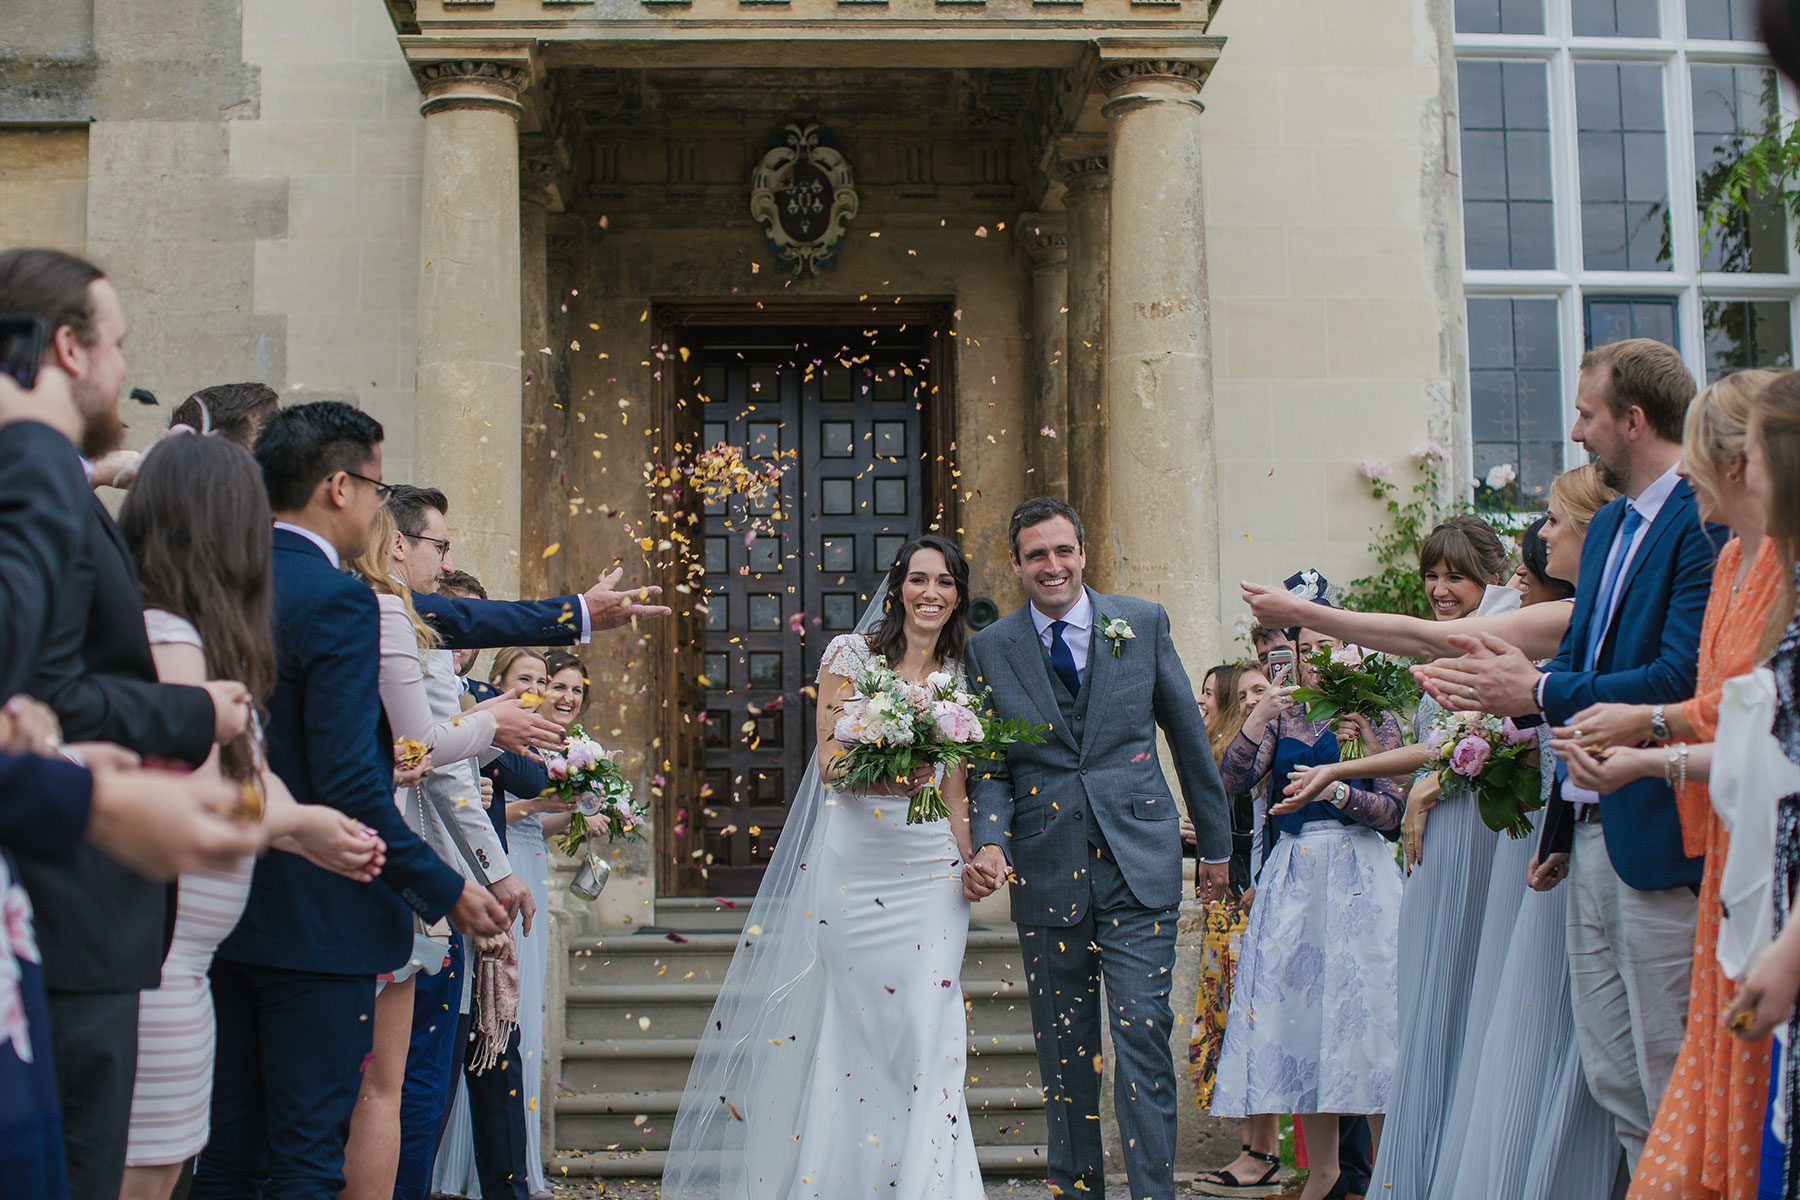 Confetti - Reportage Wedding Photography in Cheltenham | Bullit Photography